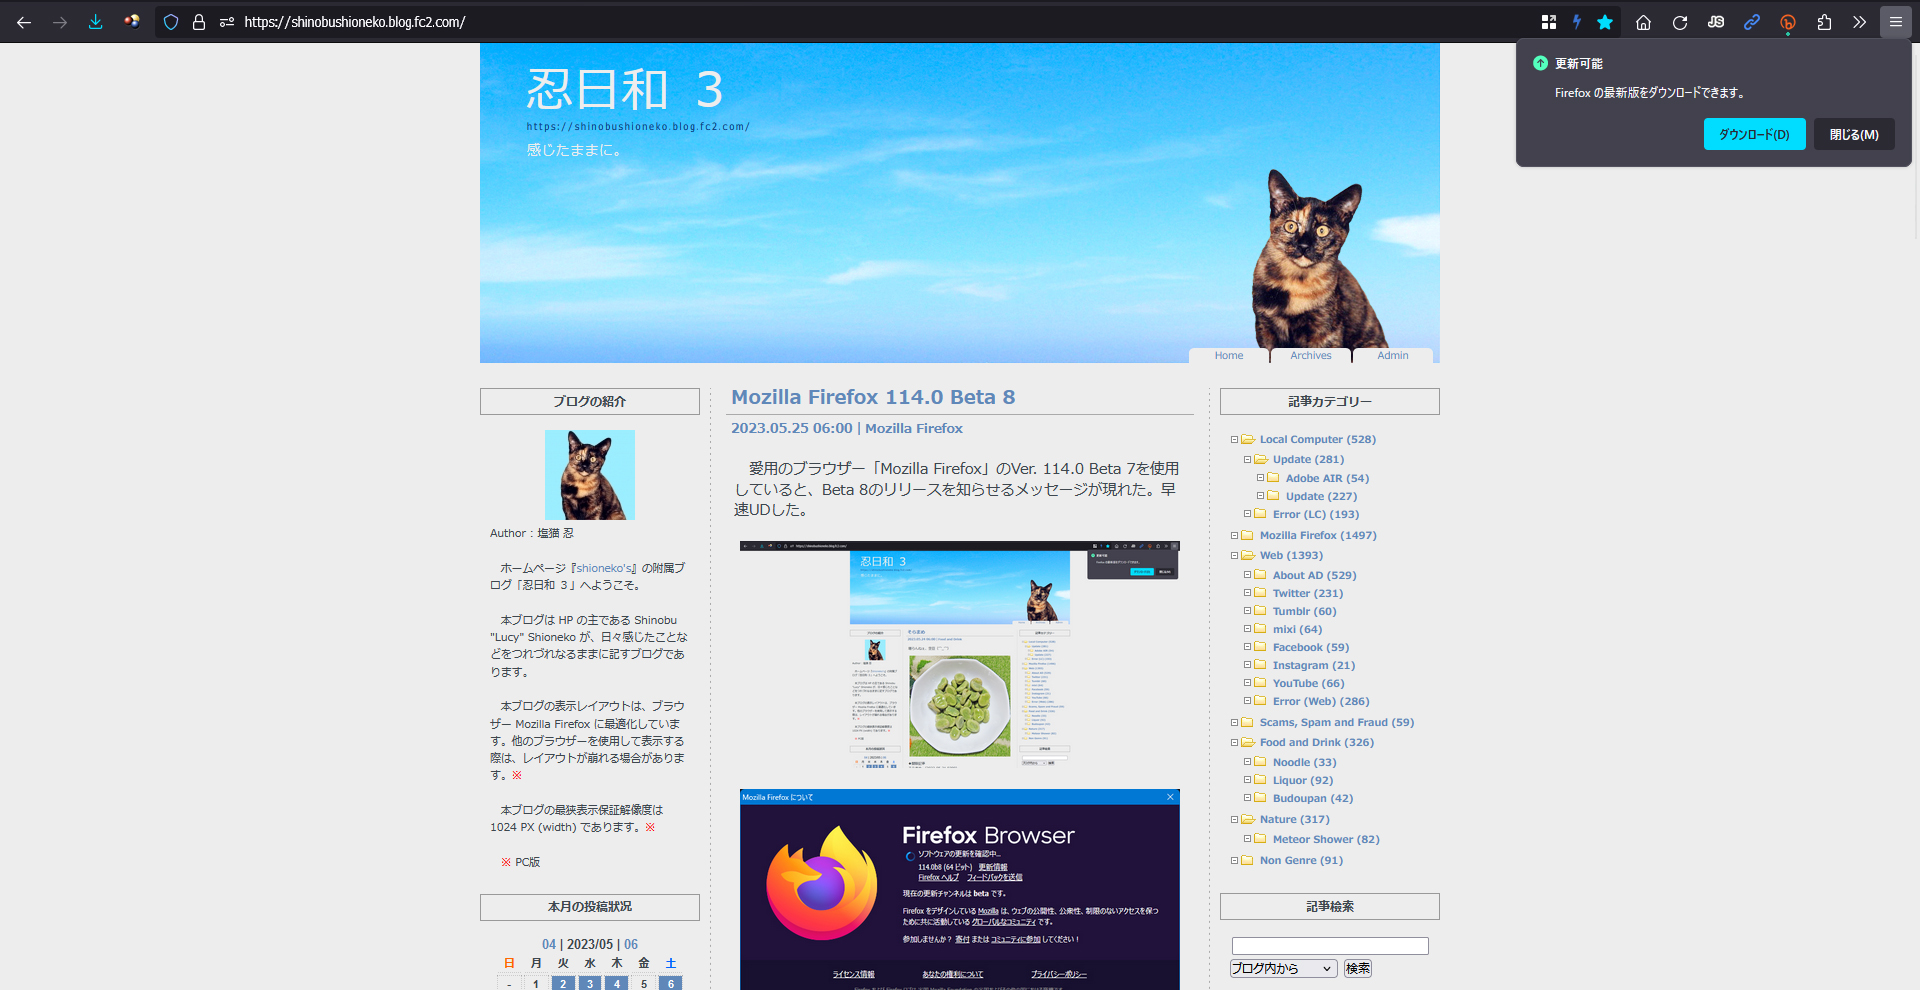 Mozilla Firefox 114.0 Beta 9